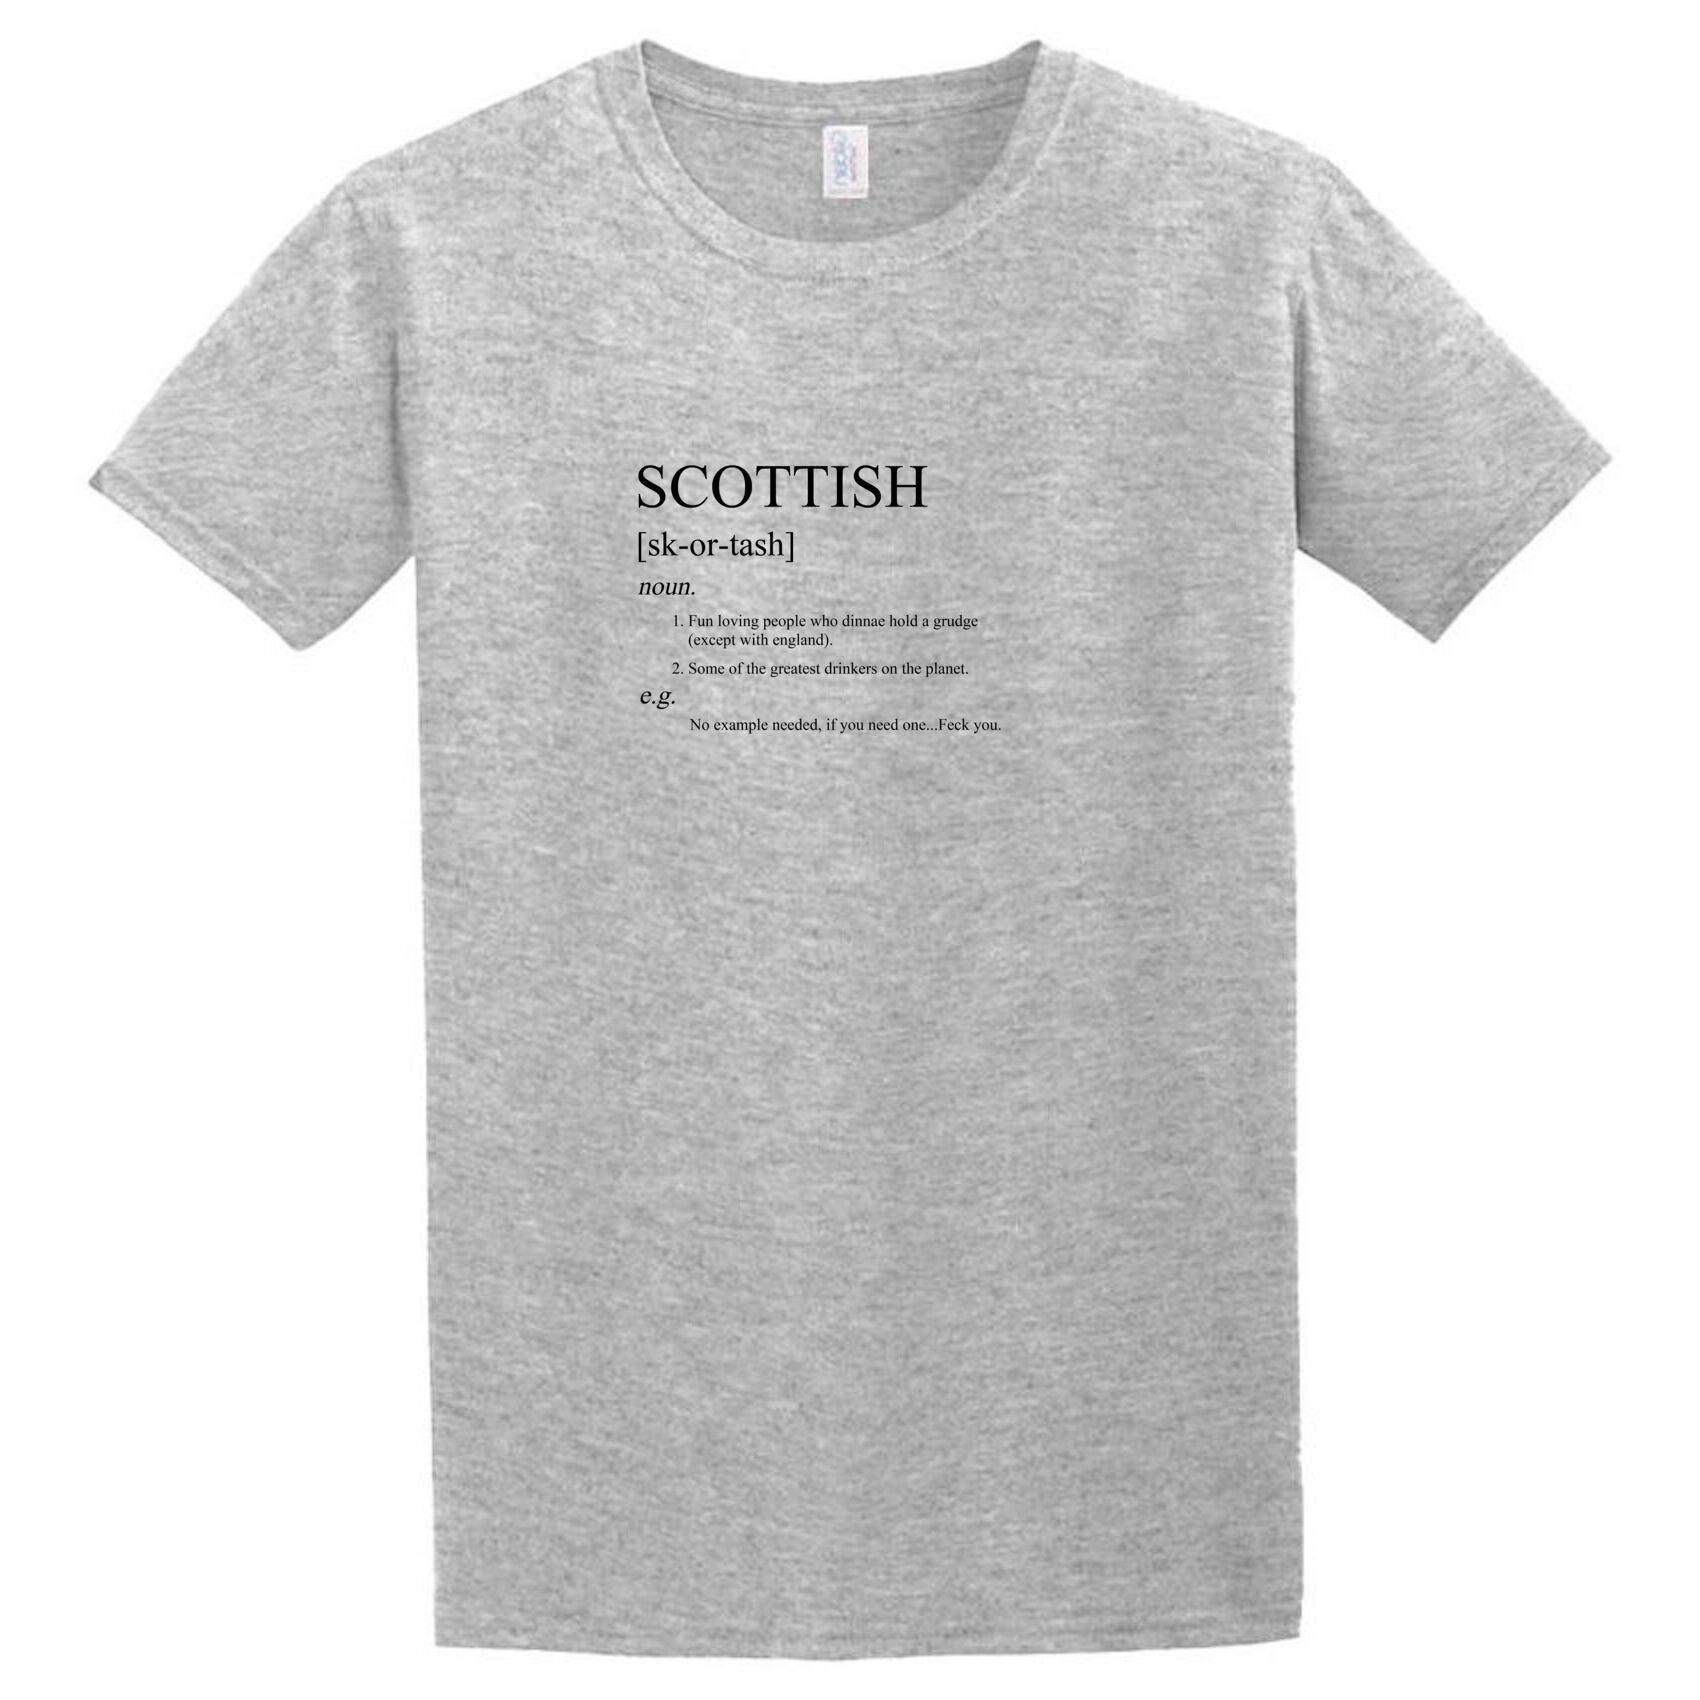 A Twisted Gifts Scottish T-Shirt.